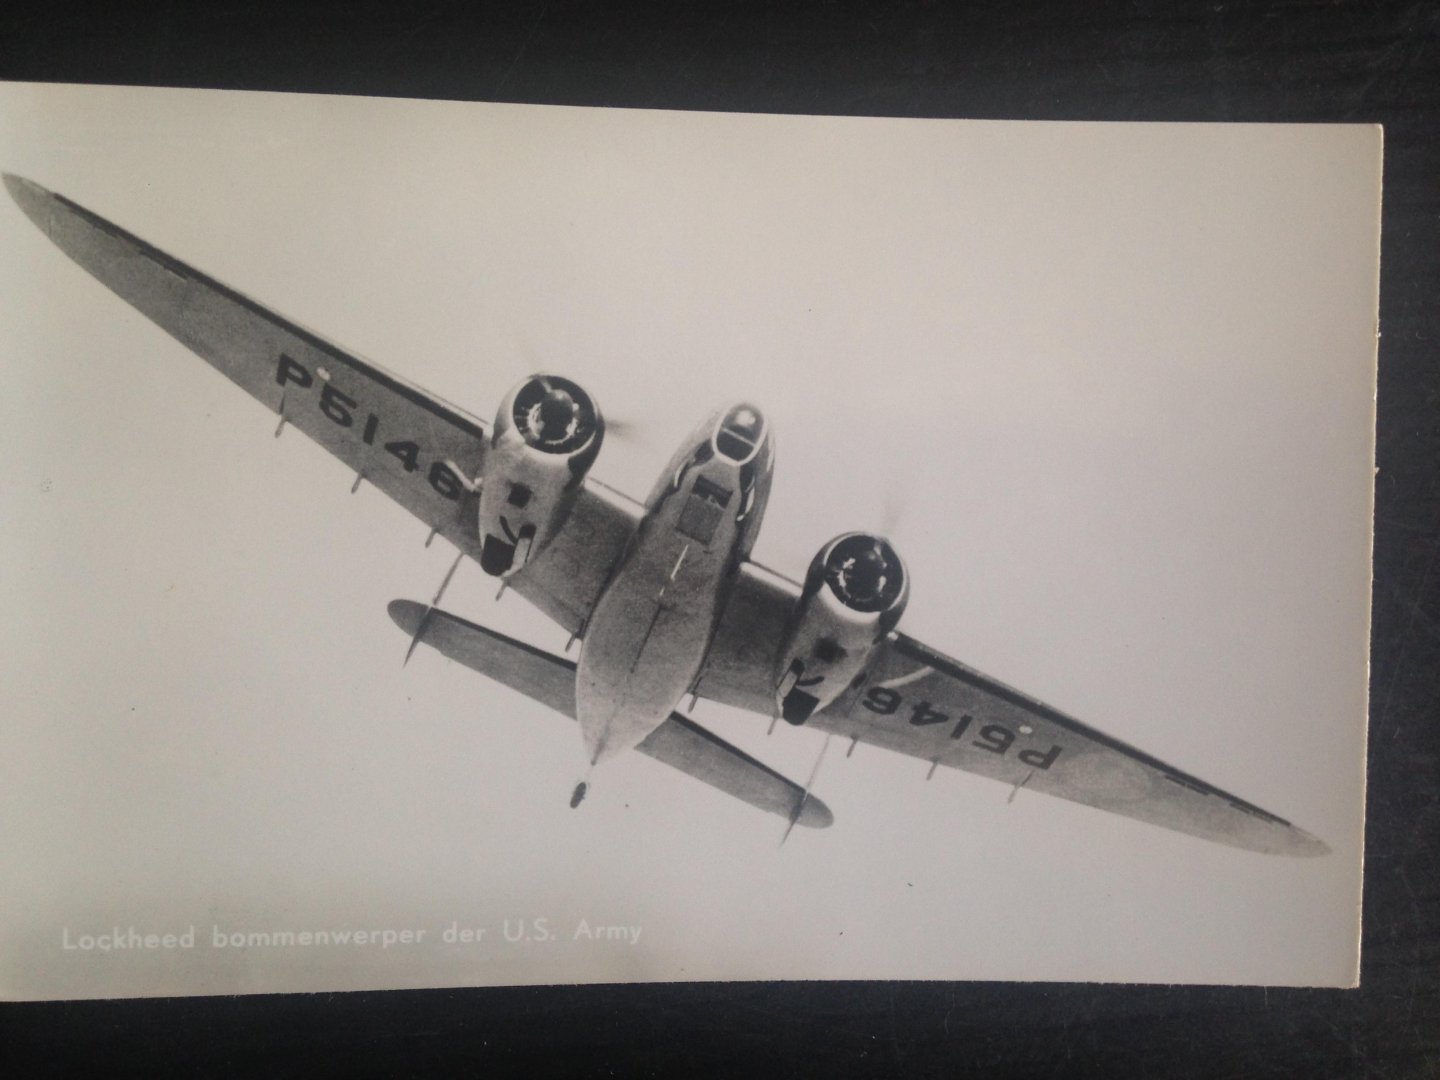  - Lockheed bommenwerper der U.S.Army, Ongelopen kaart